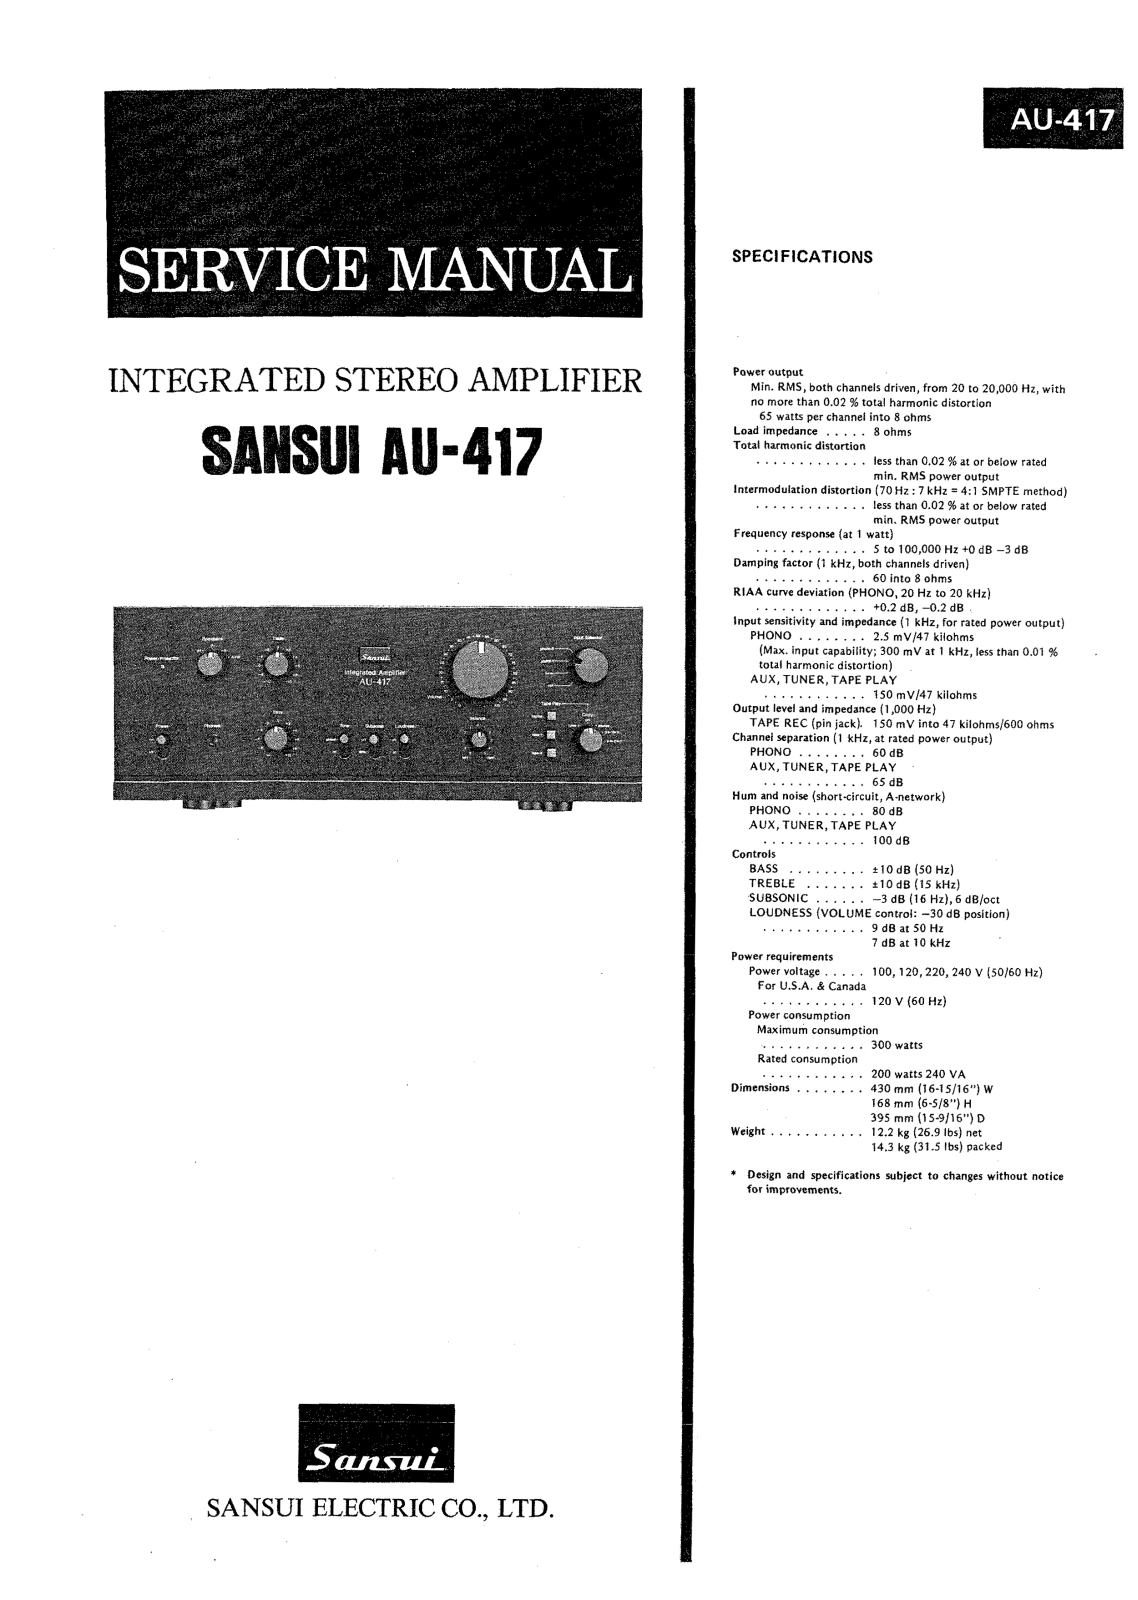 Sansui AU-417 Service manual